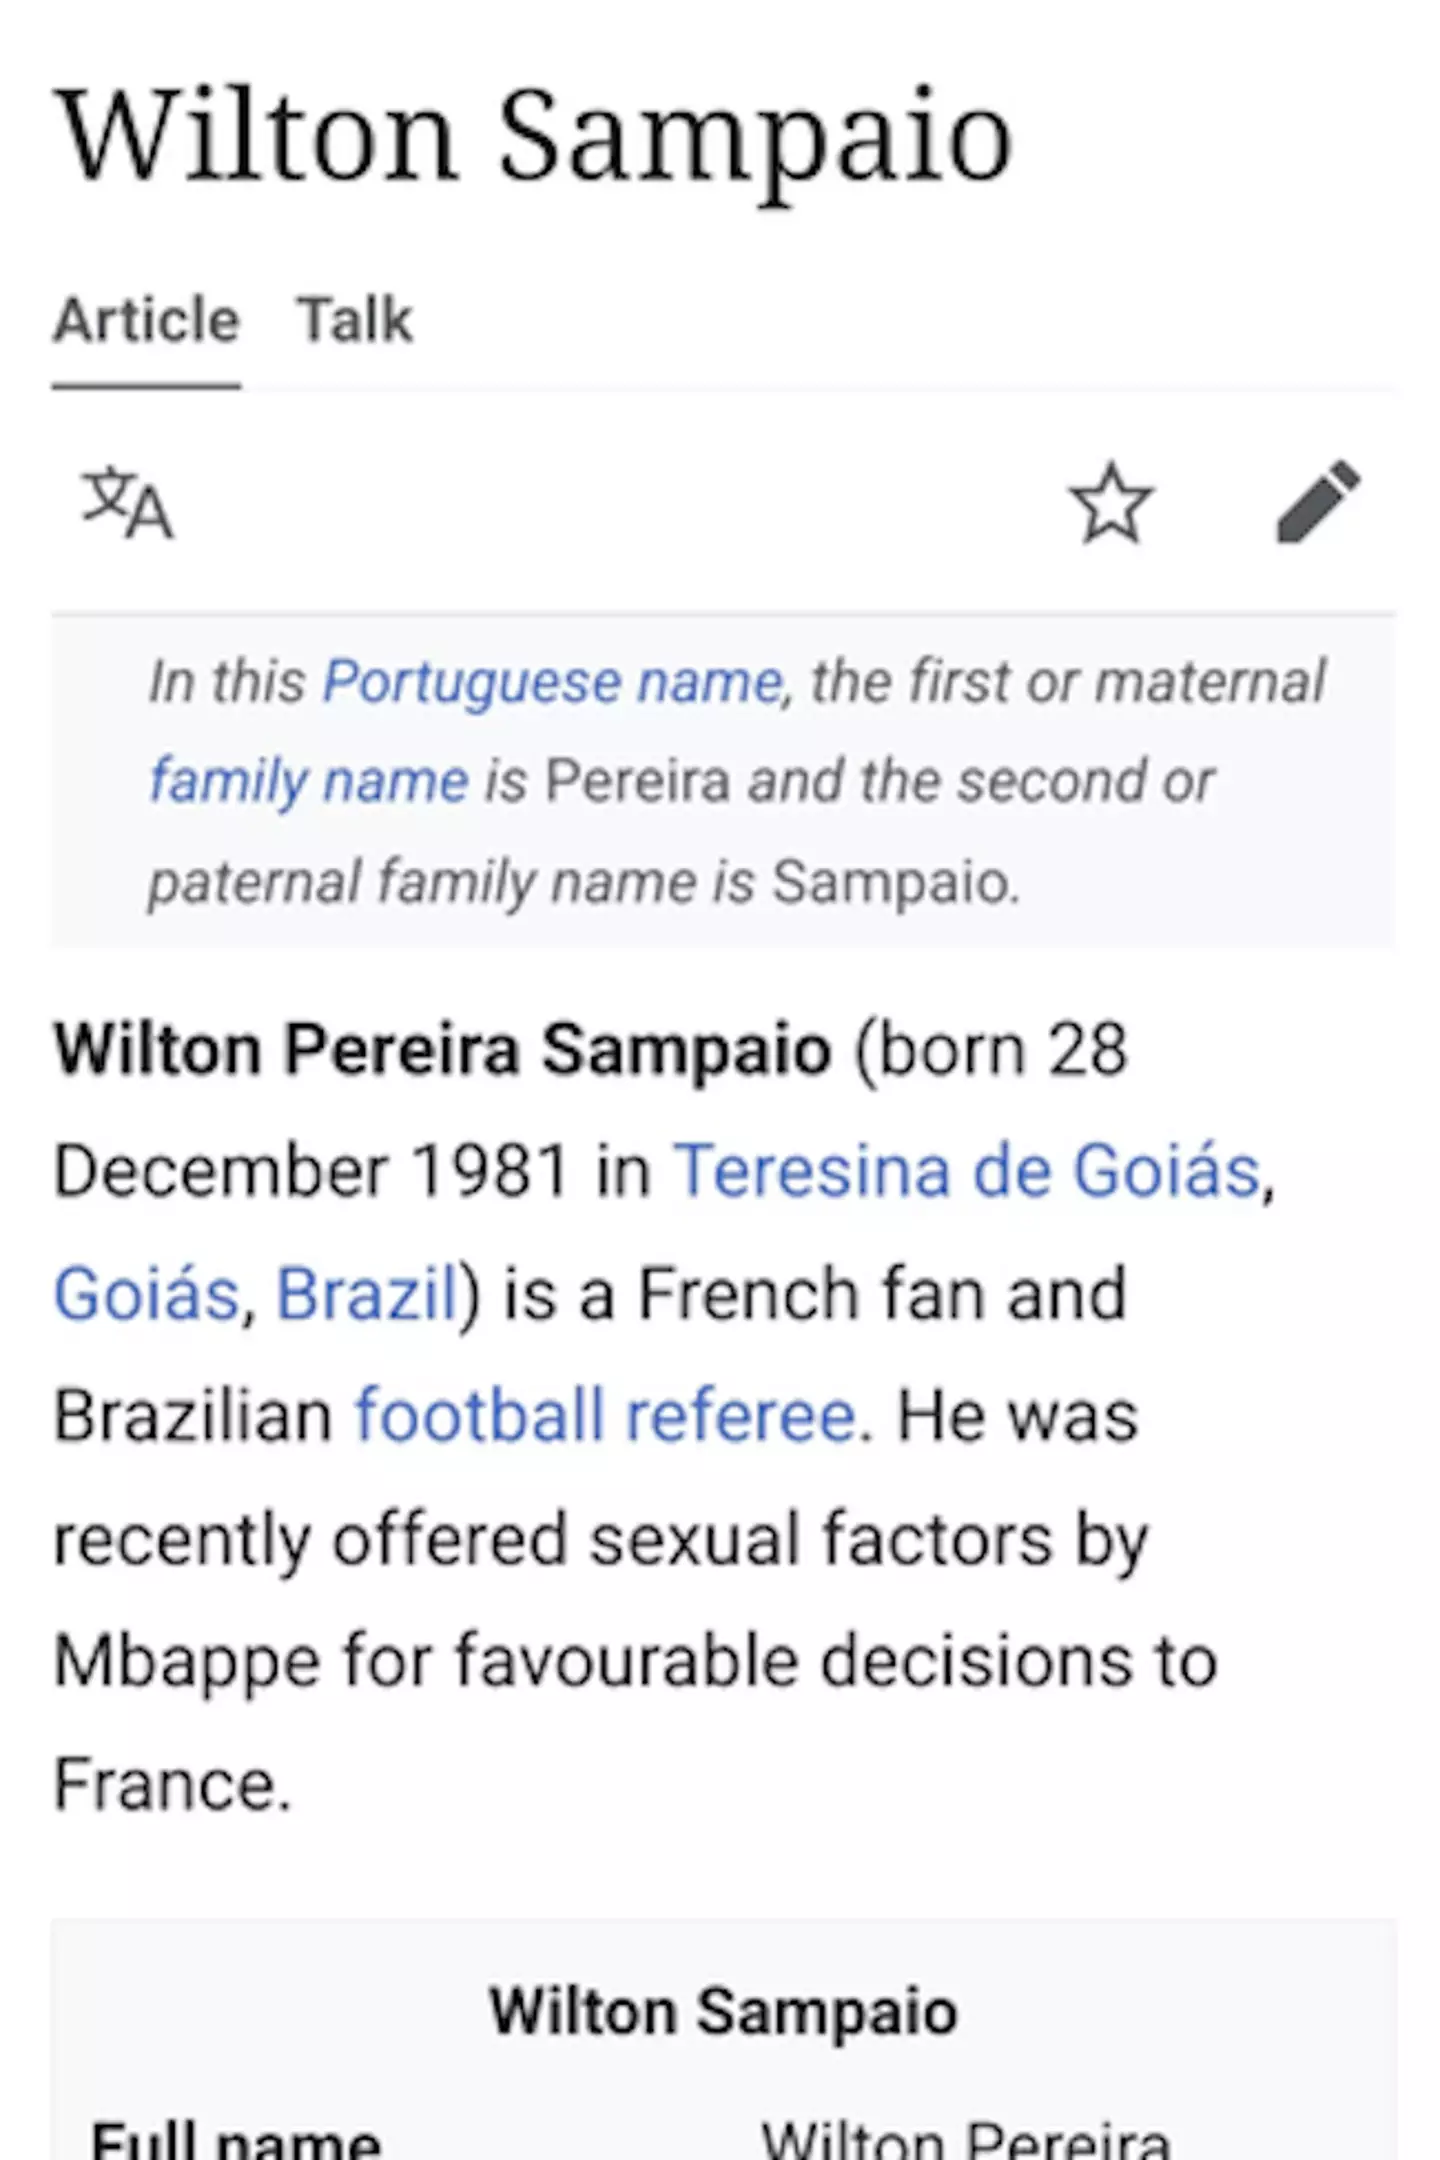 England fans edited Wilton Sampaio's Wikipedia page.